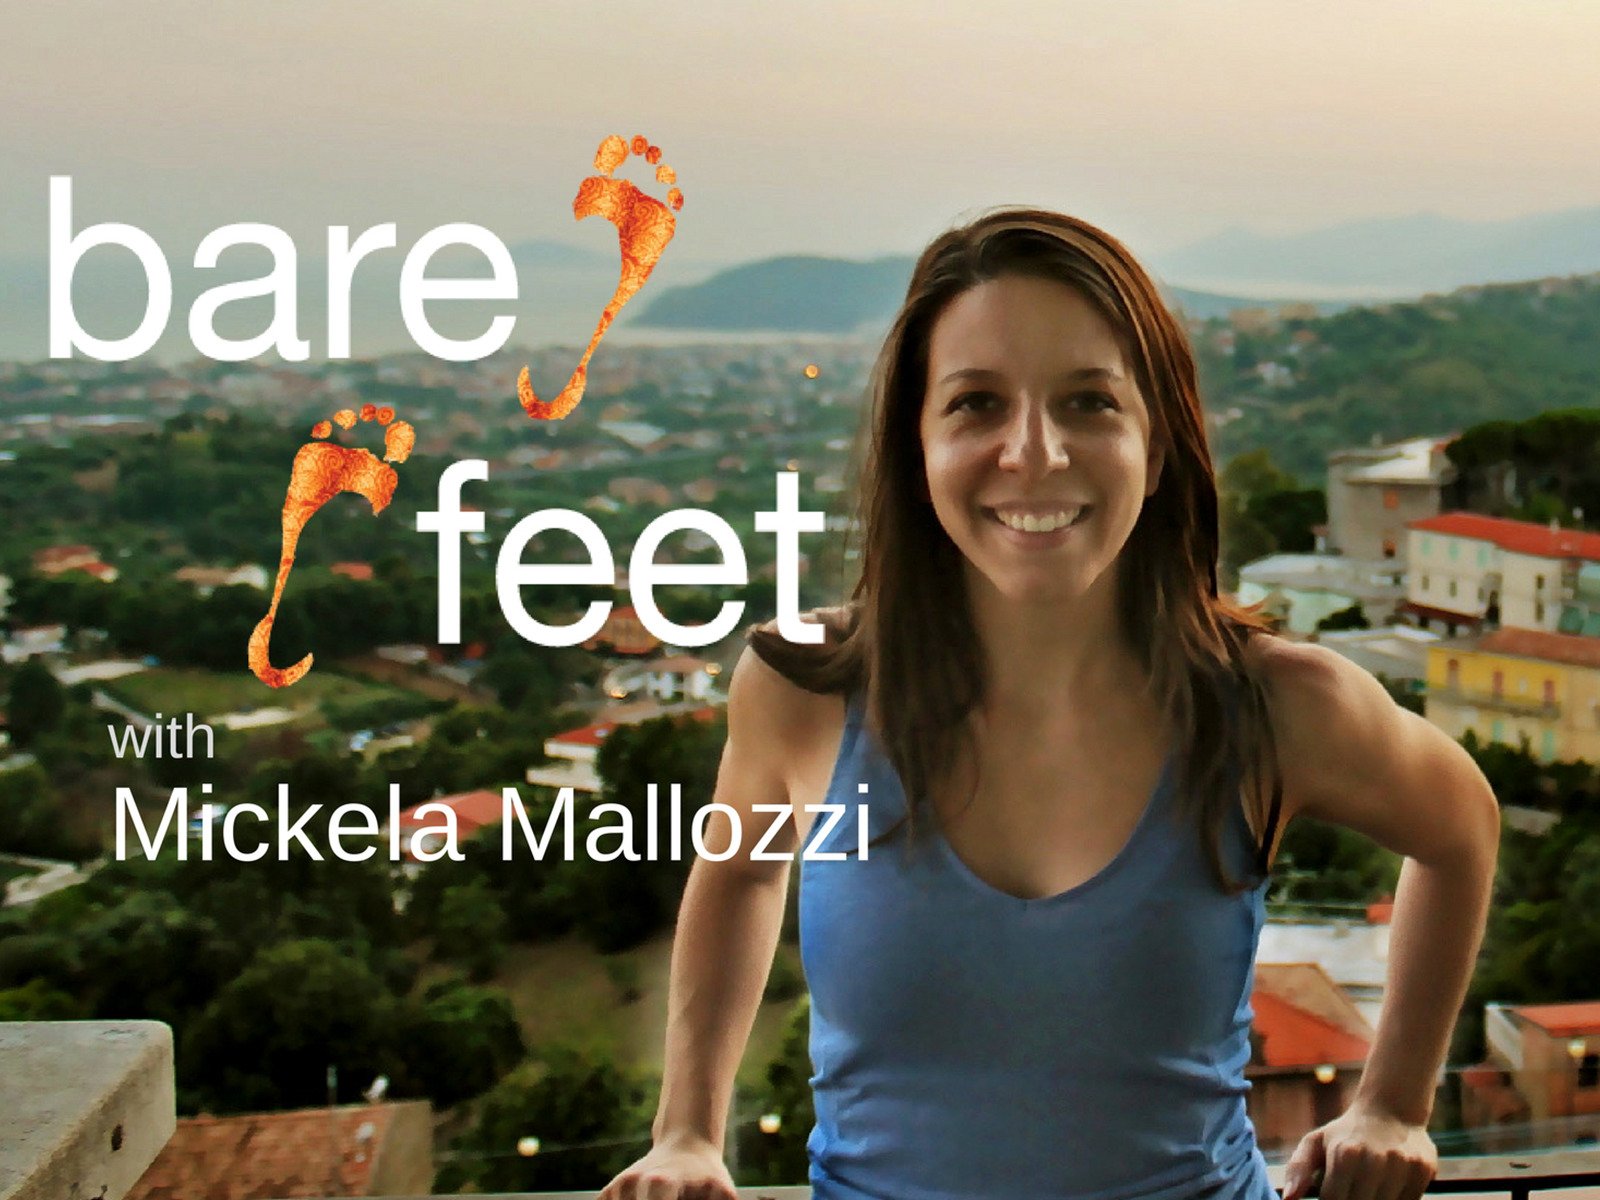 Meet Mickela Mallozzi and Her Bare Feet!